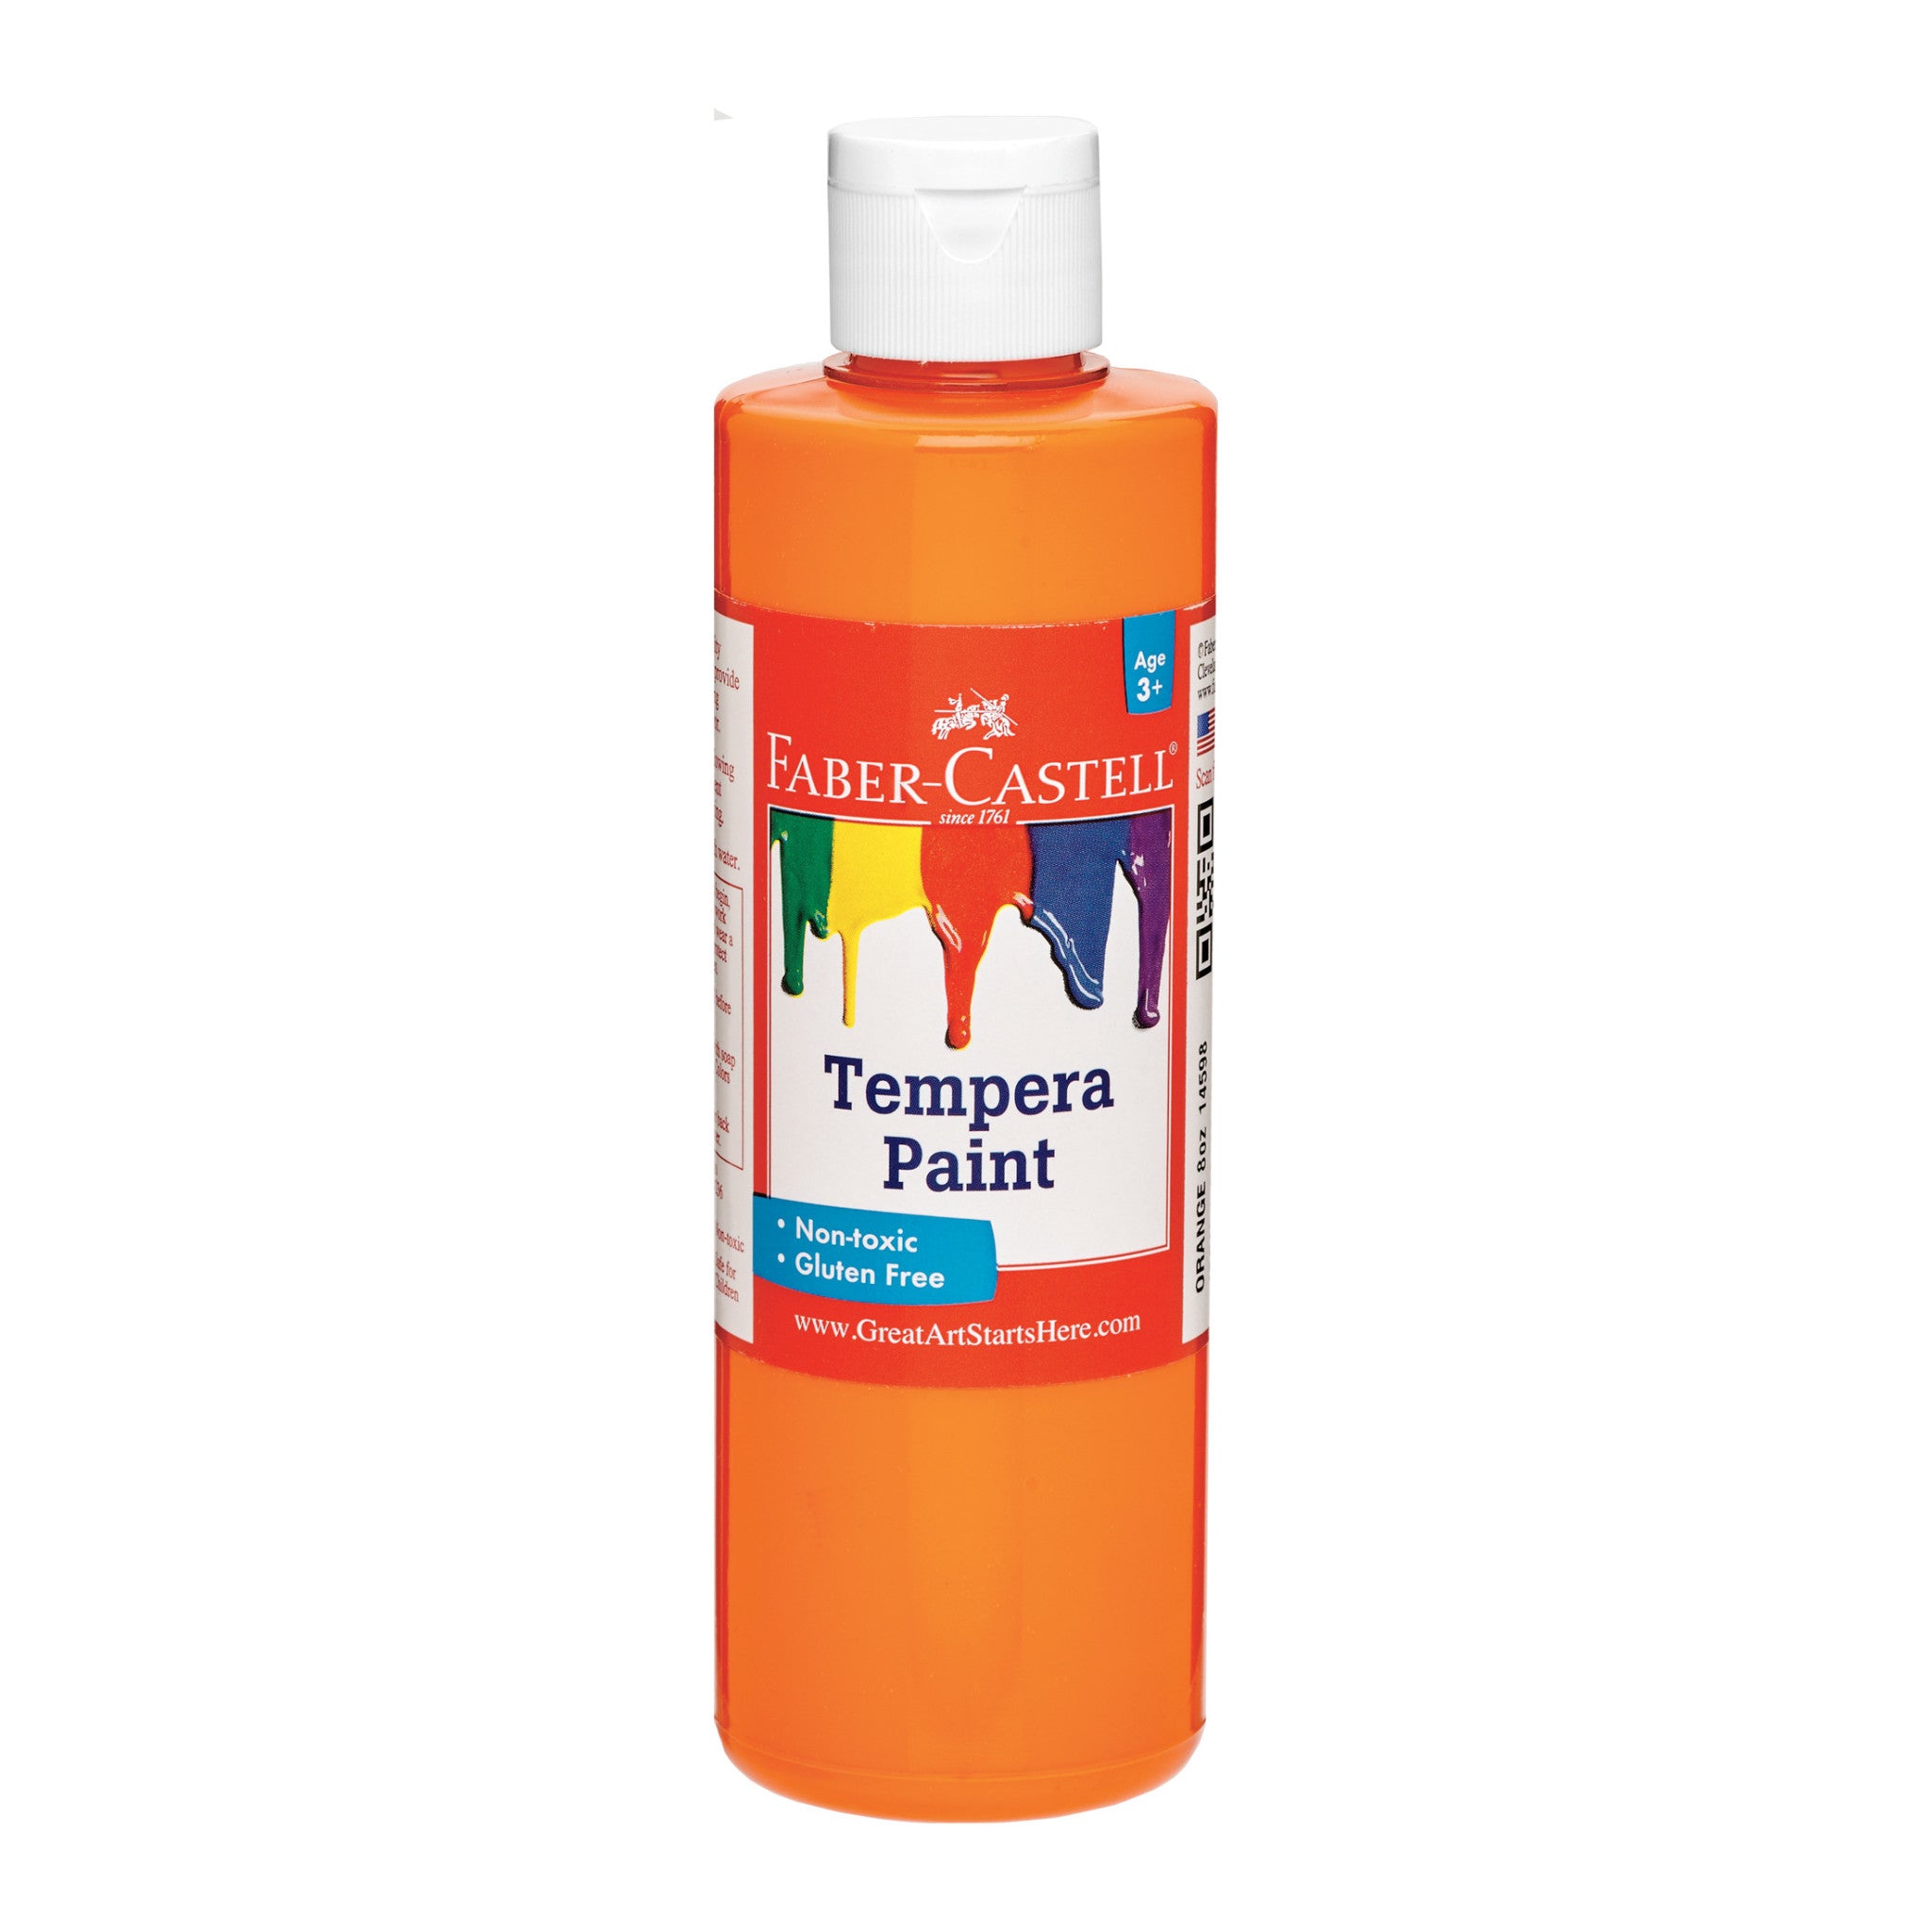 Faber-Castell Tempera Paint 8 oz Orange